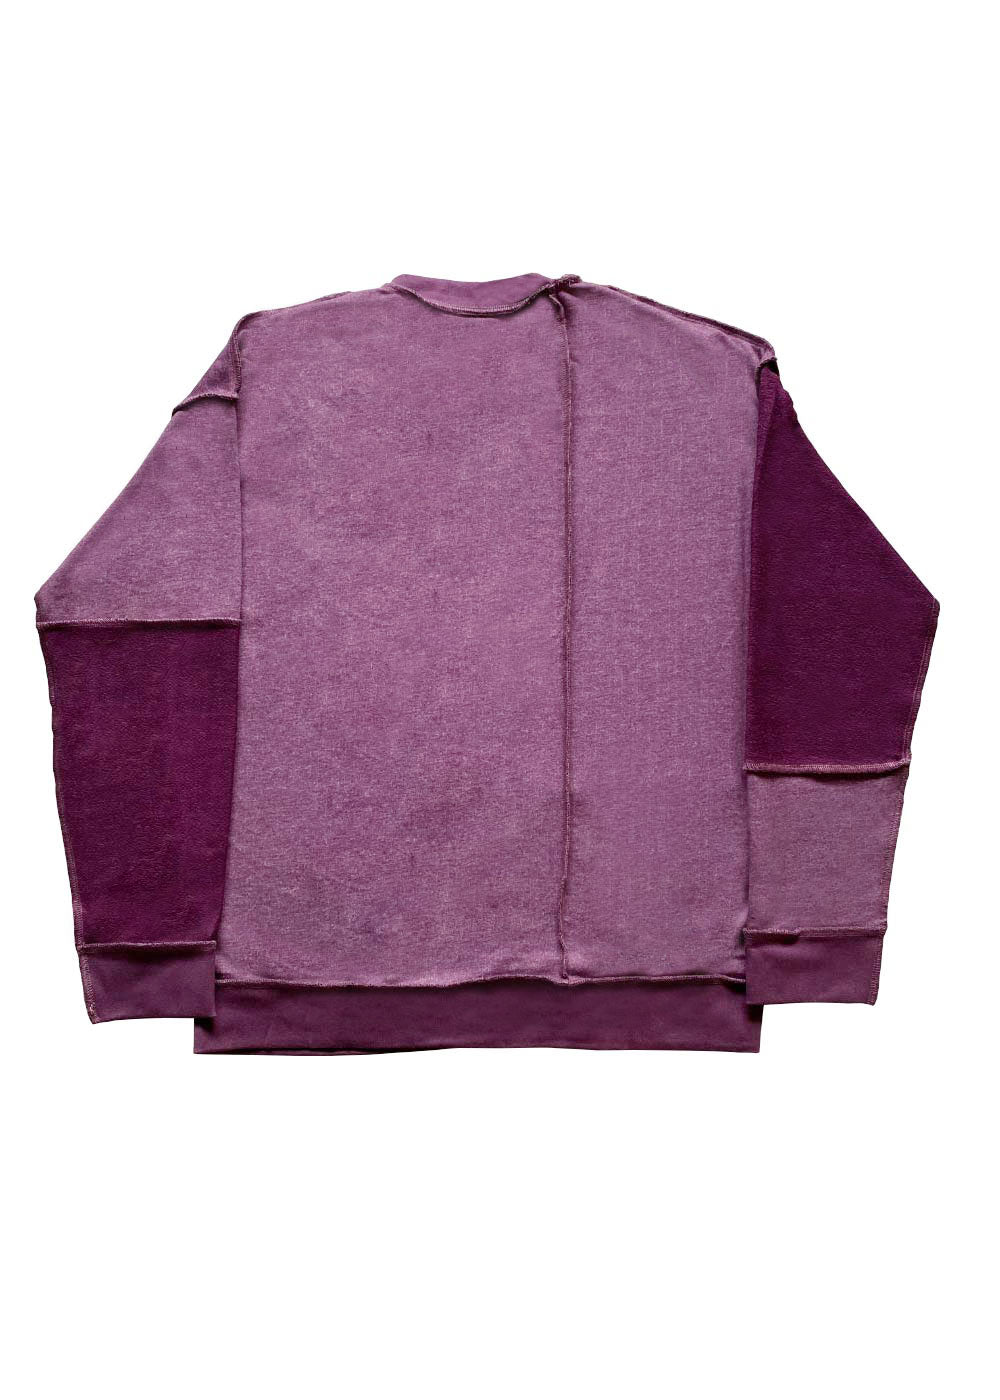 In & out Reversible Oversize Sweatshirt